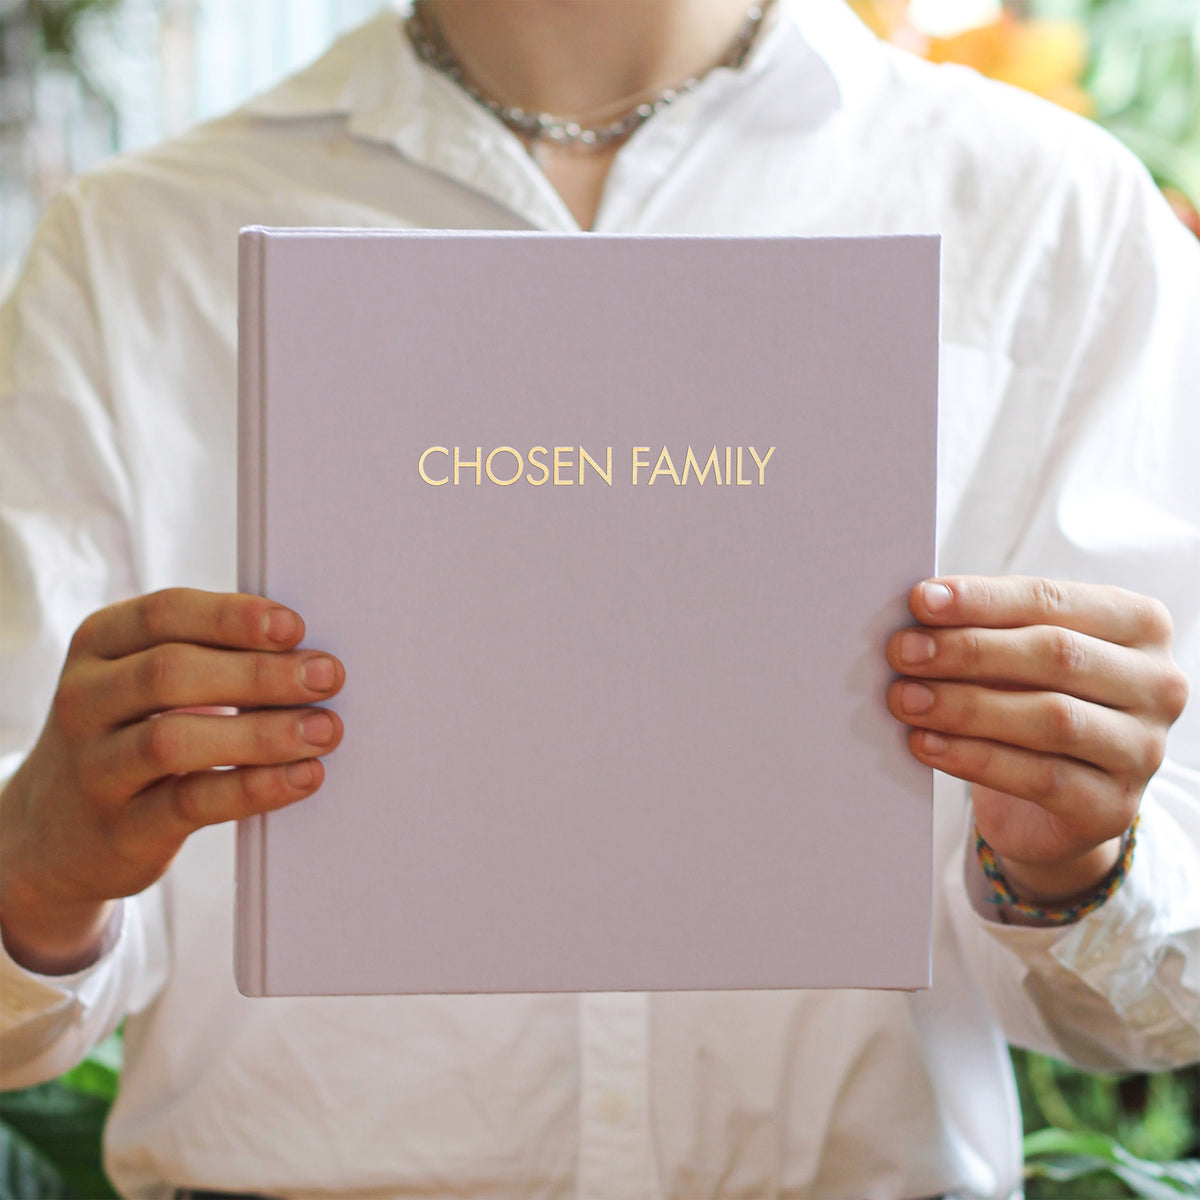 Chosen Family Album | Medium Photo Binder for 4 x 6 photos | with Lavender Cotton Cover